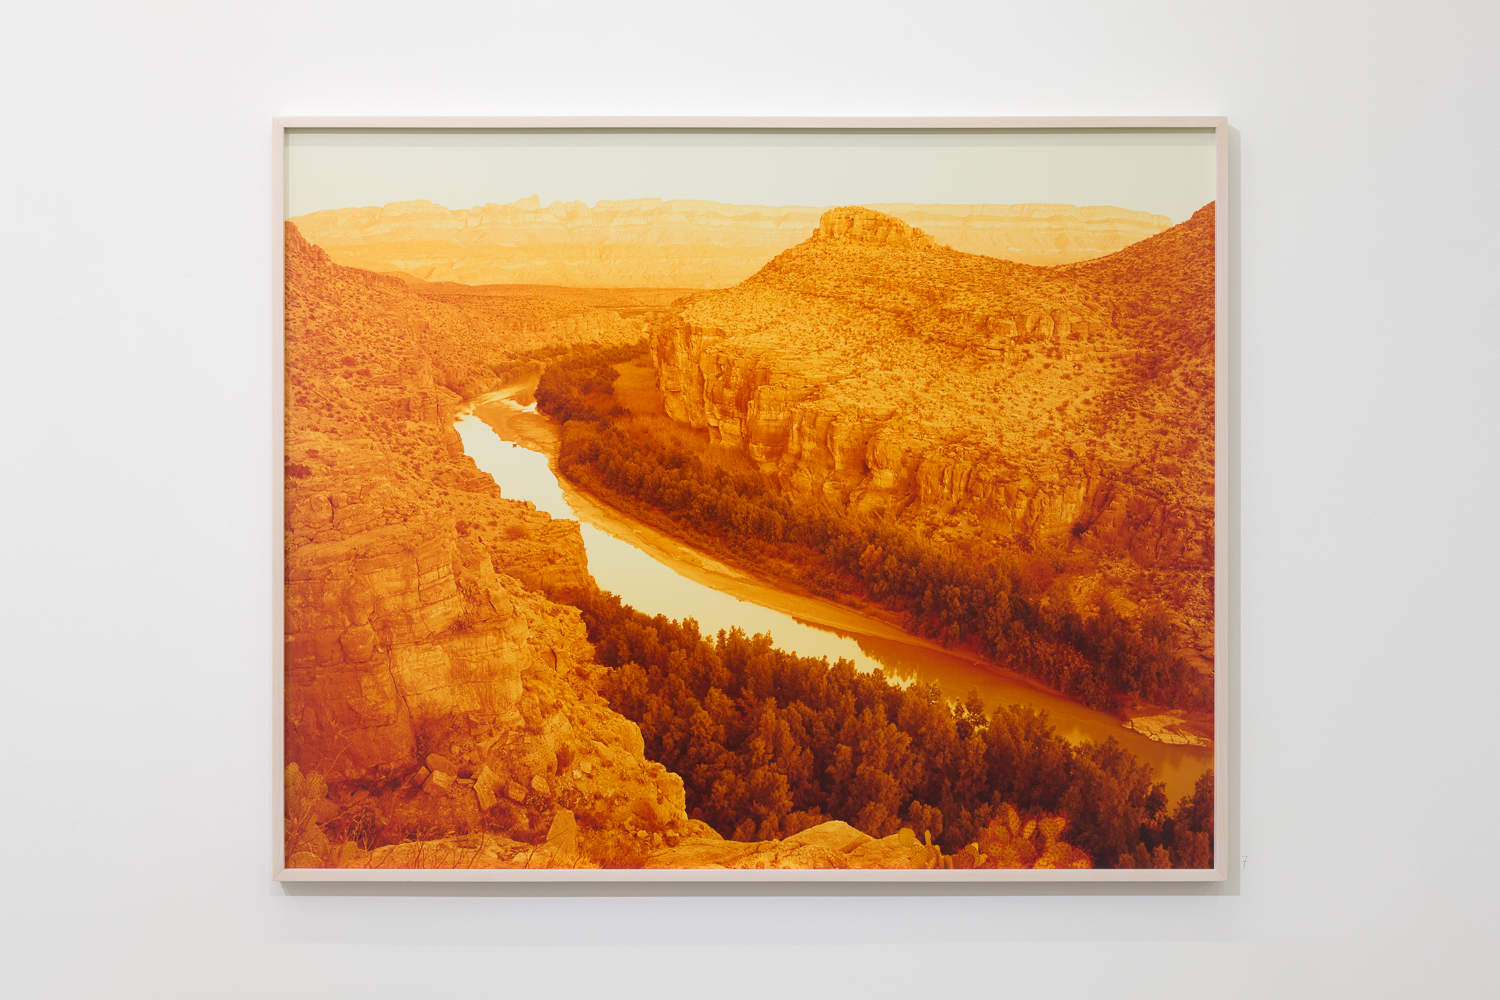 David Benjamin Sherry, Sunset on the Sierra del Carmen Mountains Along the Rio Grande, Big Bend National Park Texas, 2020, c-type print, framed